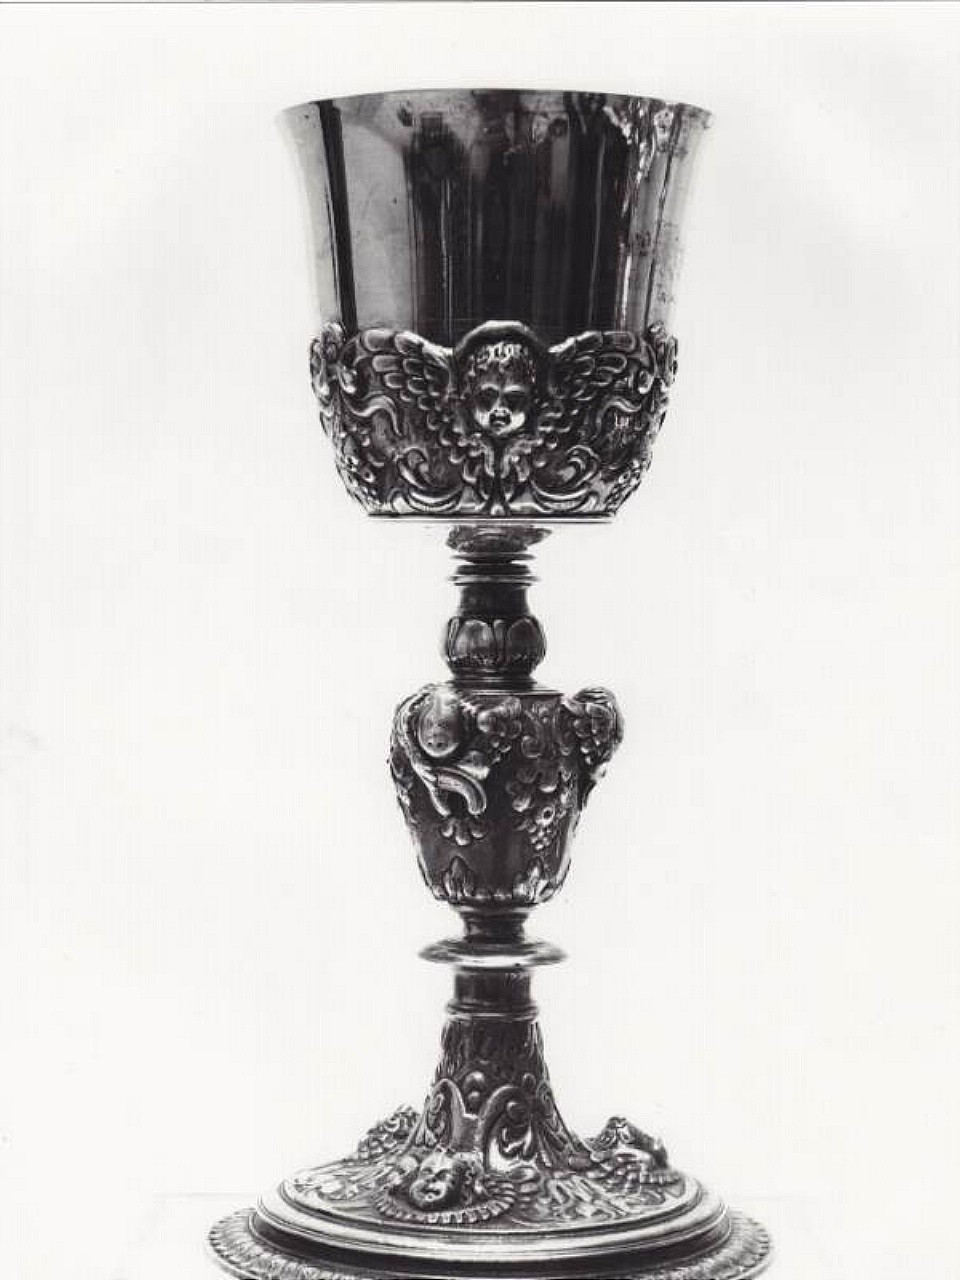 cherubini e motivi decorativi fitomorfi (calice) - manifattura toscana (sec. XVII)